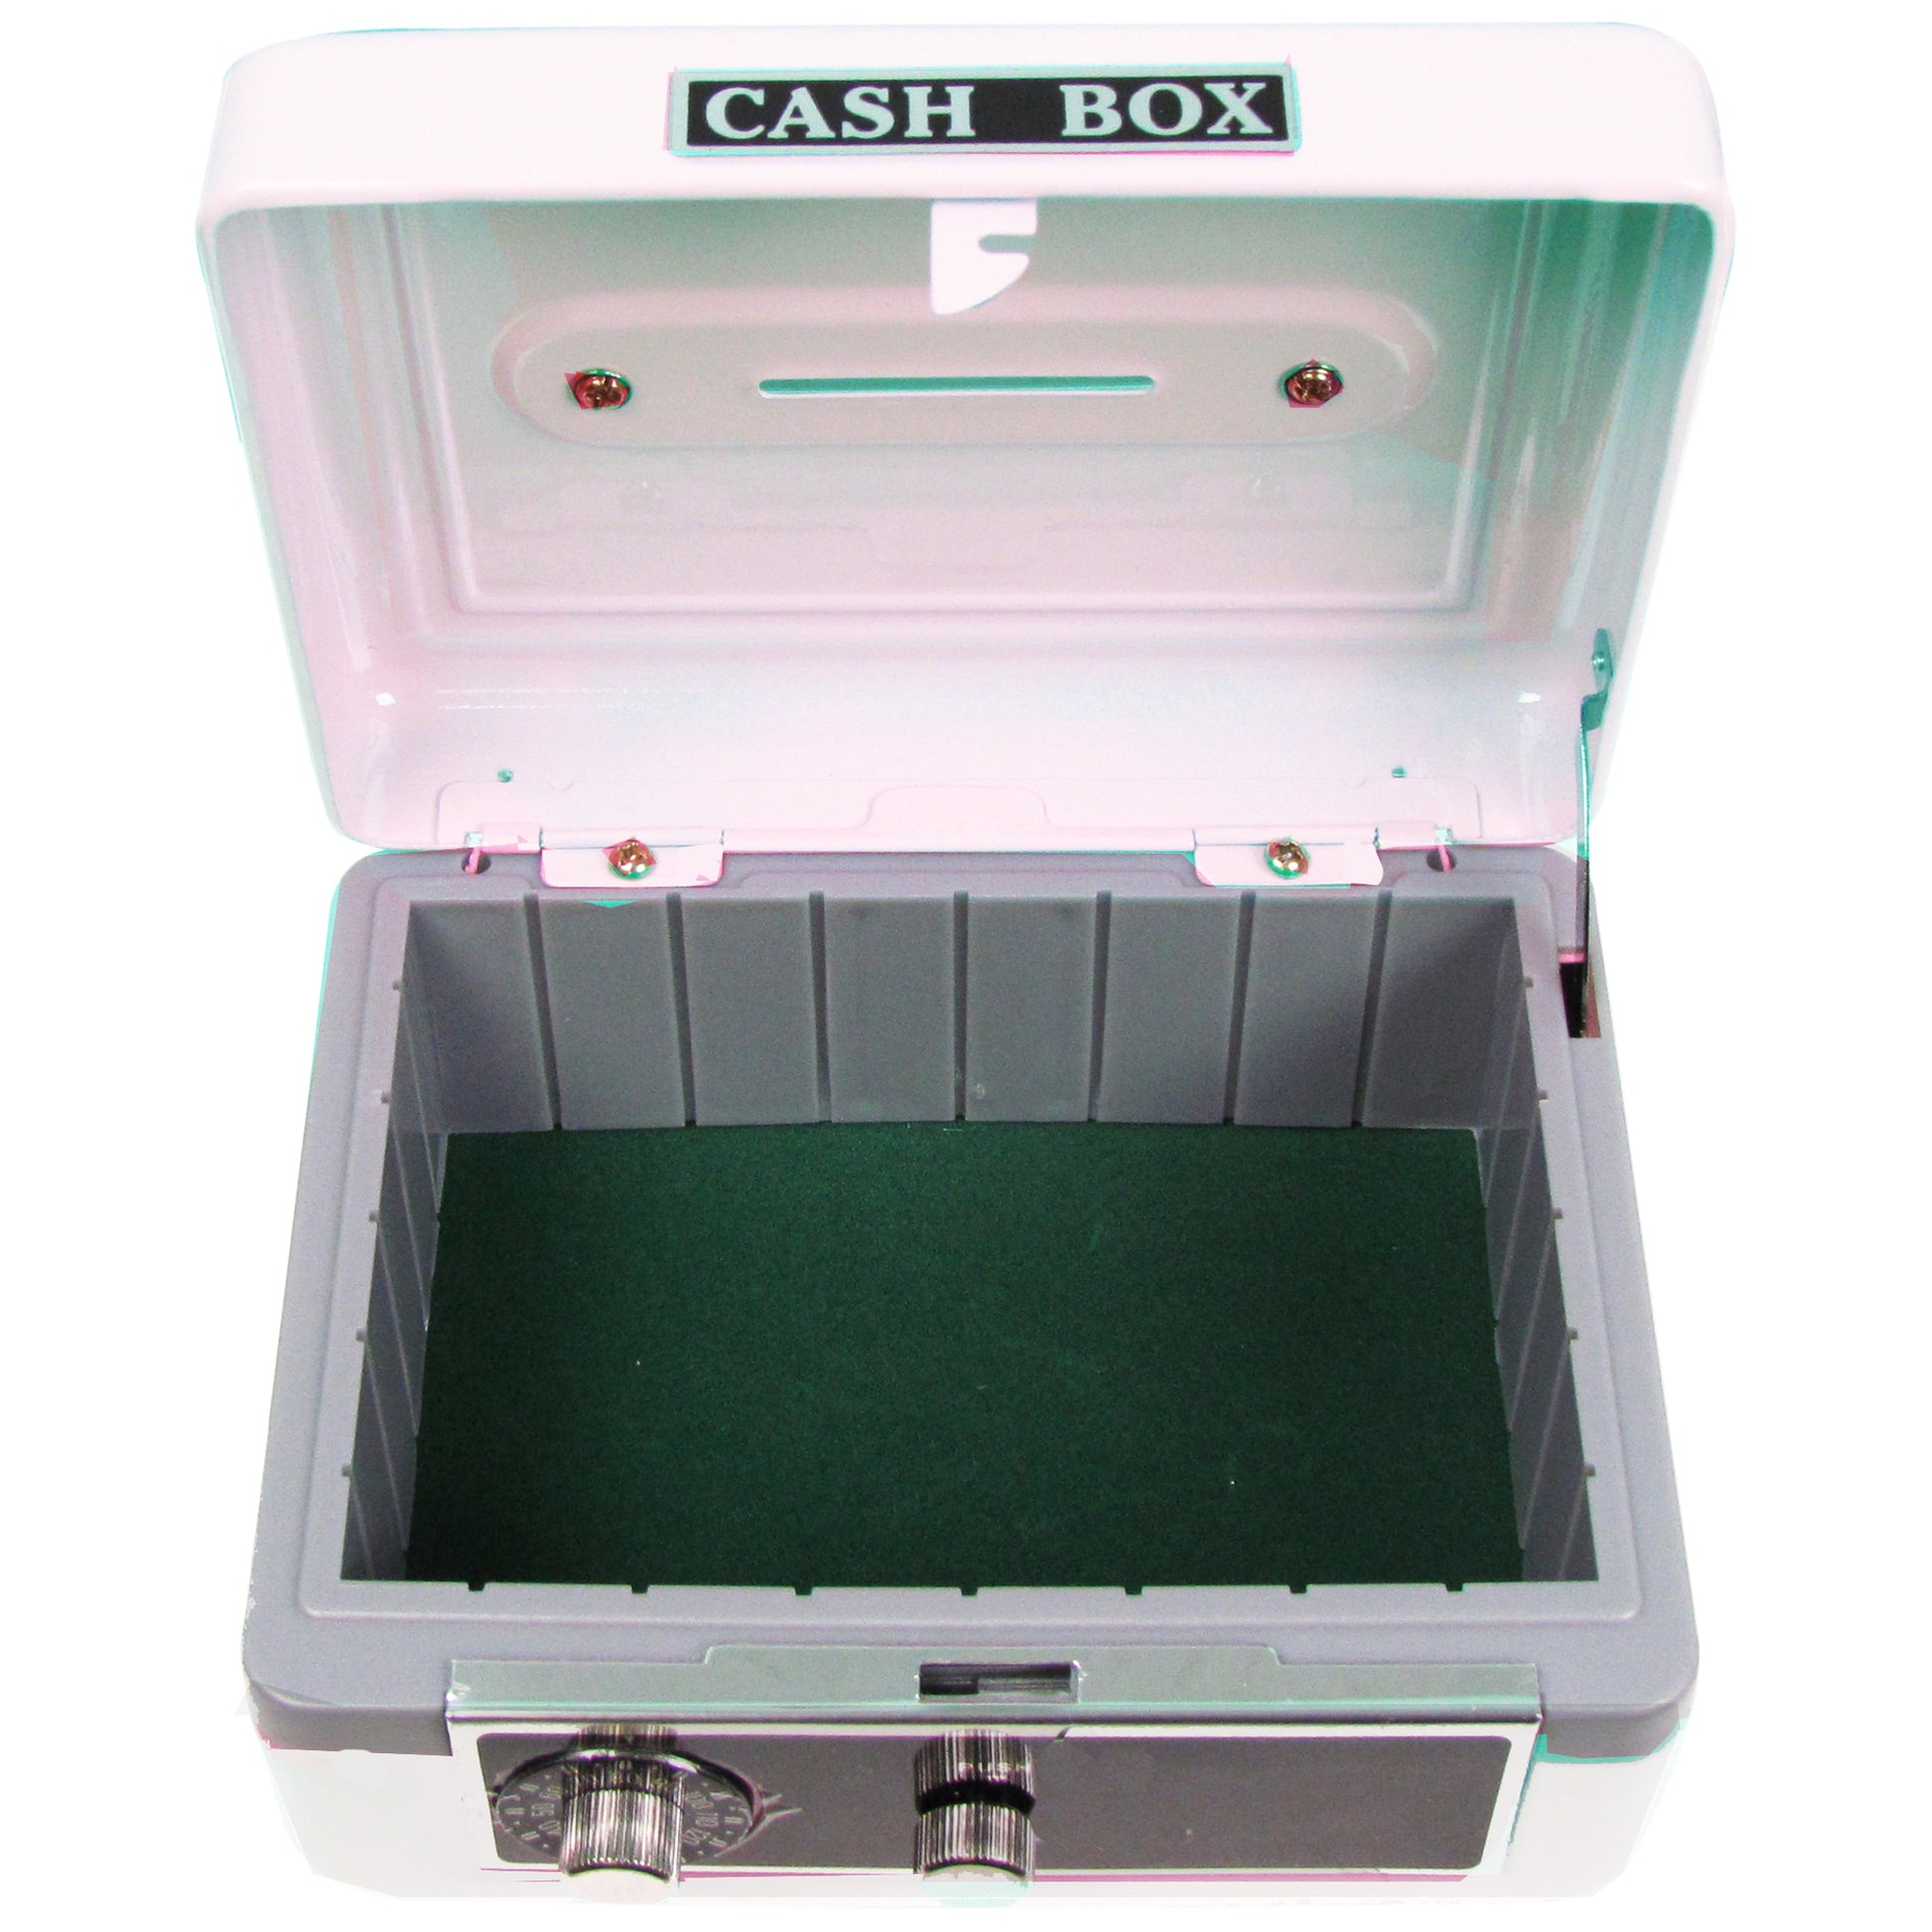 Personalized White Cash Box with Basketballs design